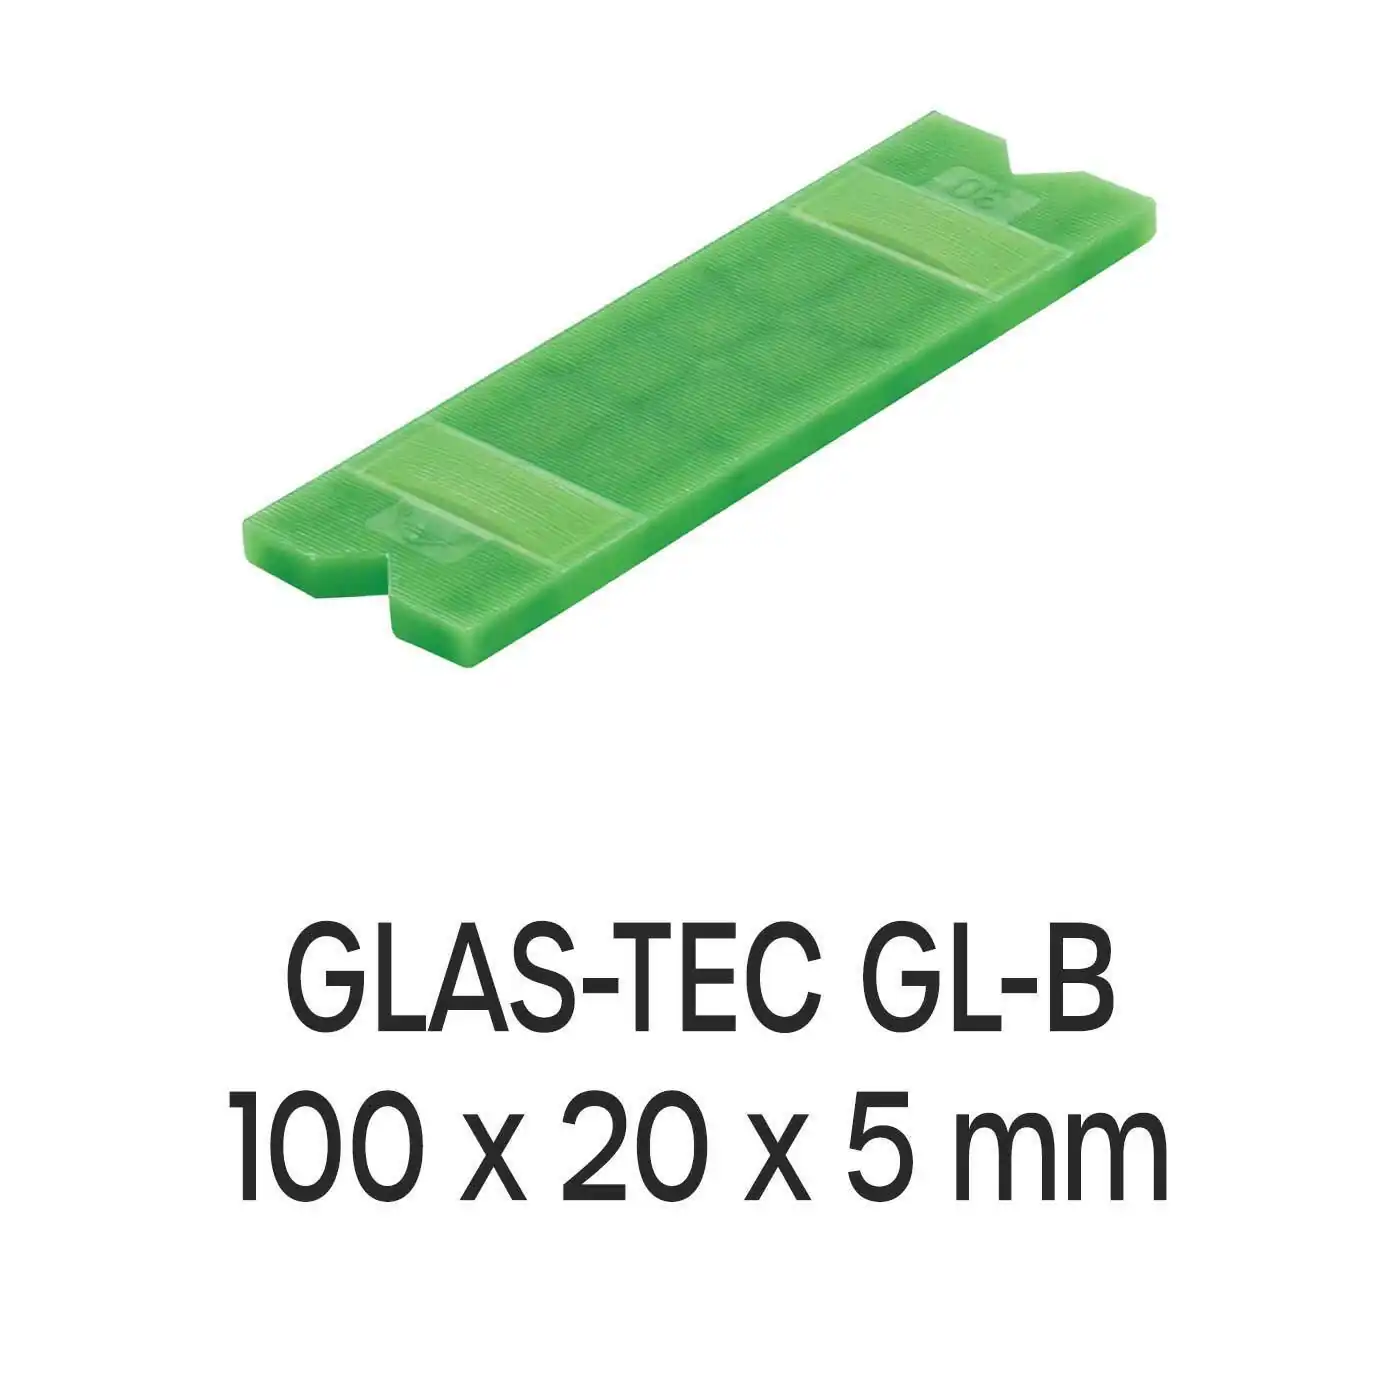 Roto GLAS-TEC GL-B 100 x 20 x 5 mm Verglasungsklötze 500 Stück